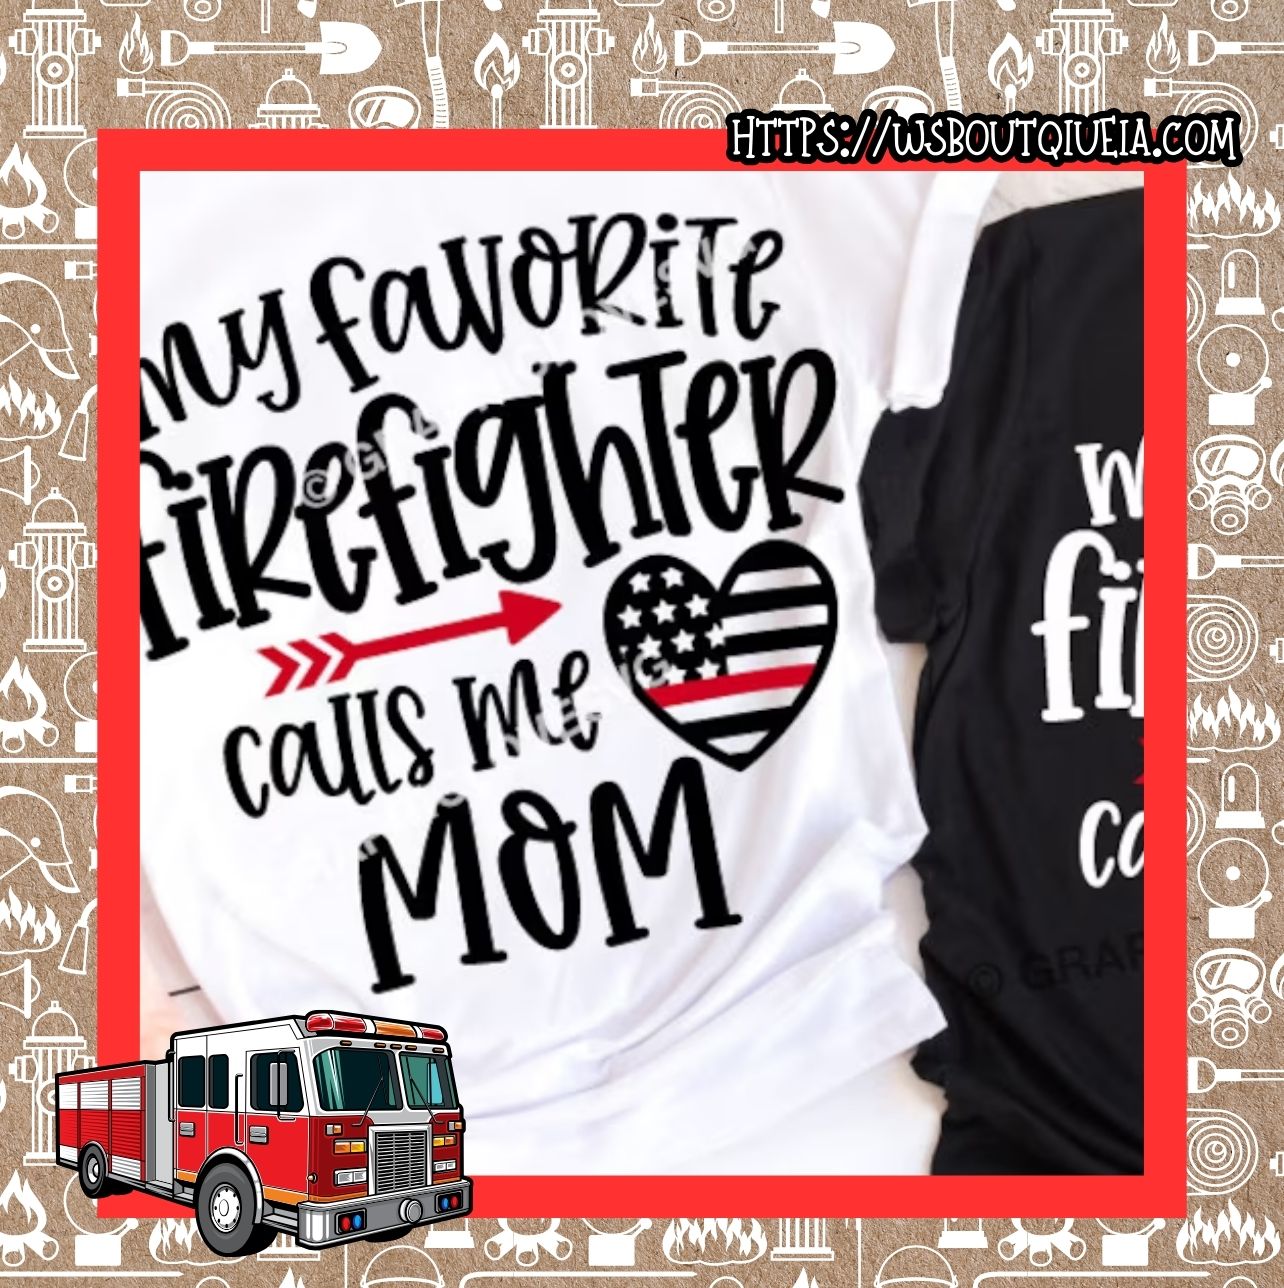 My Favorite Firefighter Calls Me Mom Graphic Tee/Sweatshirt